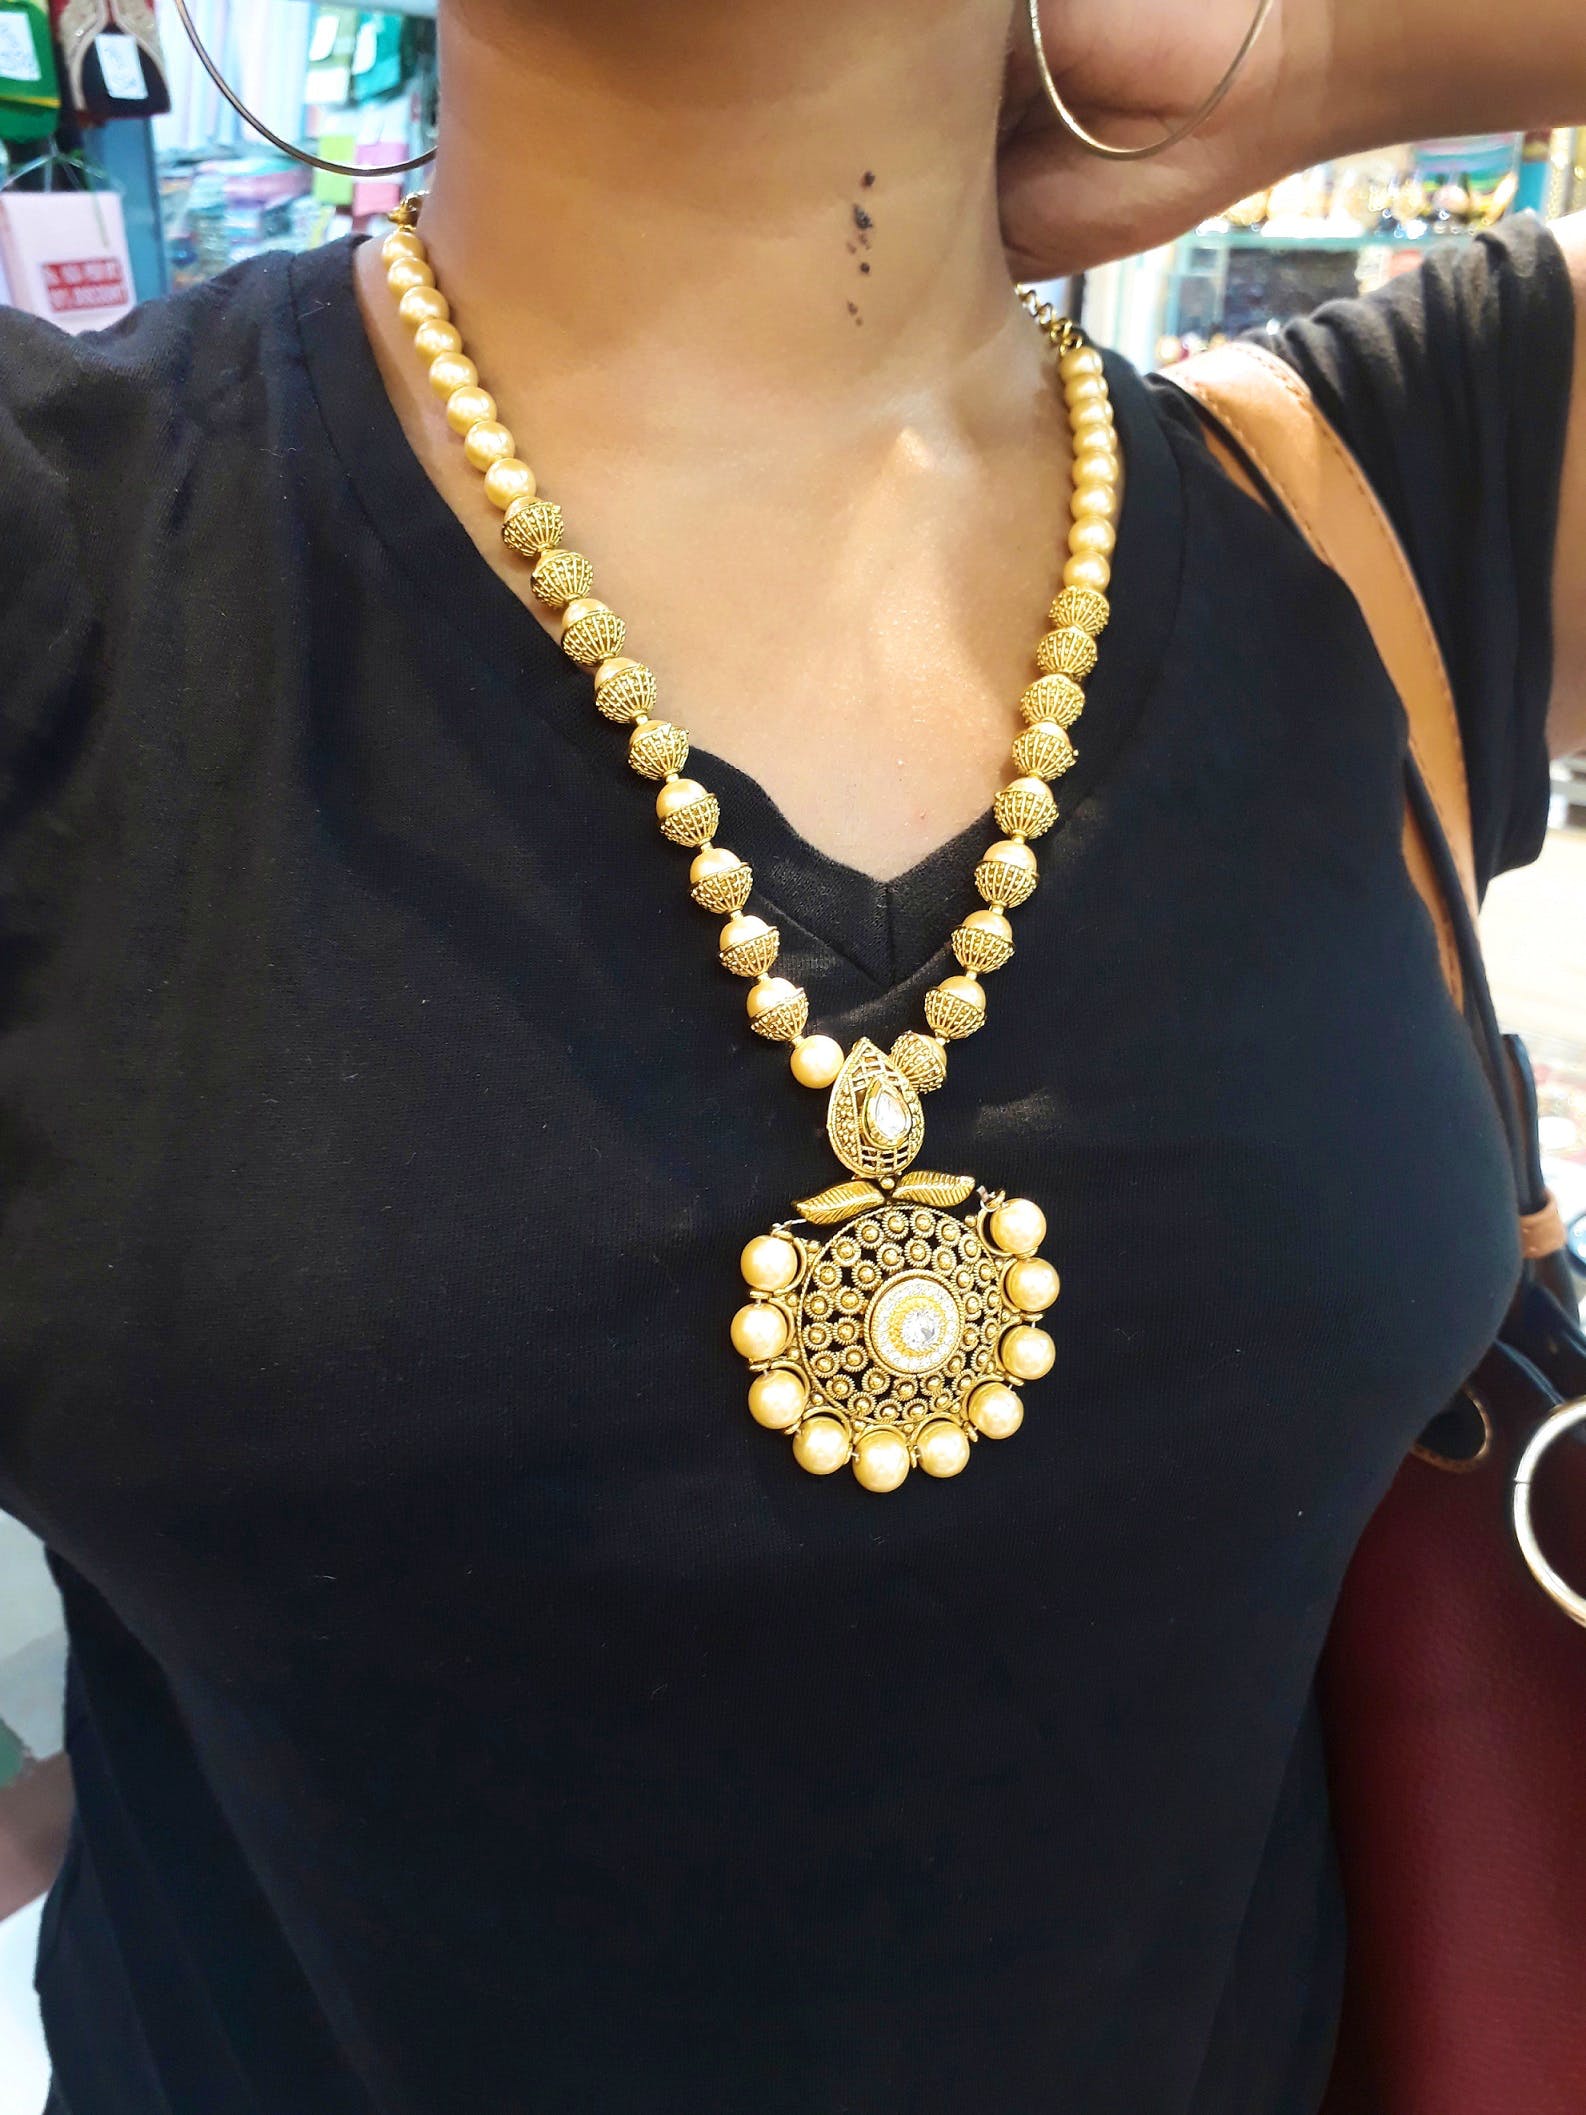 Necklace,Jewellery,Fashion accessory,Body jewelry,Pearl,Chain,Neck,Fashion,Bead,Gold